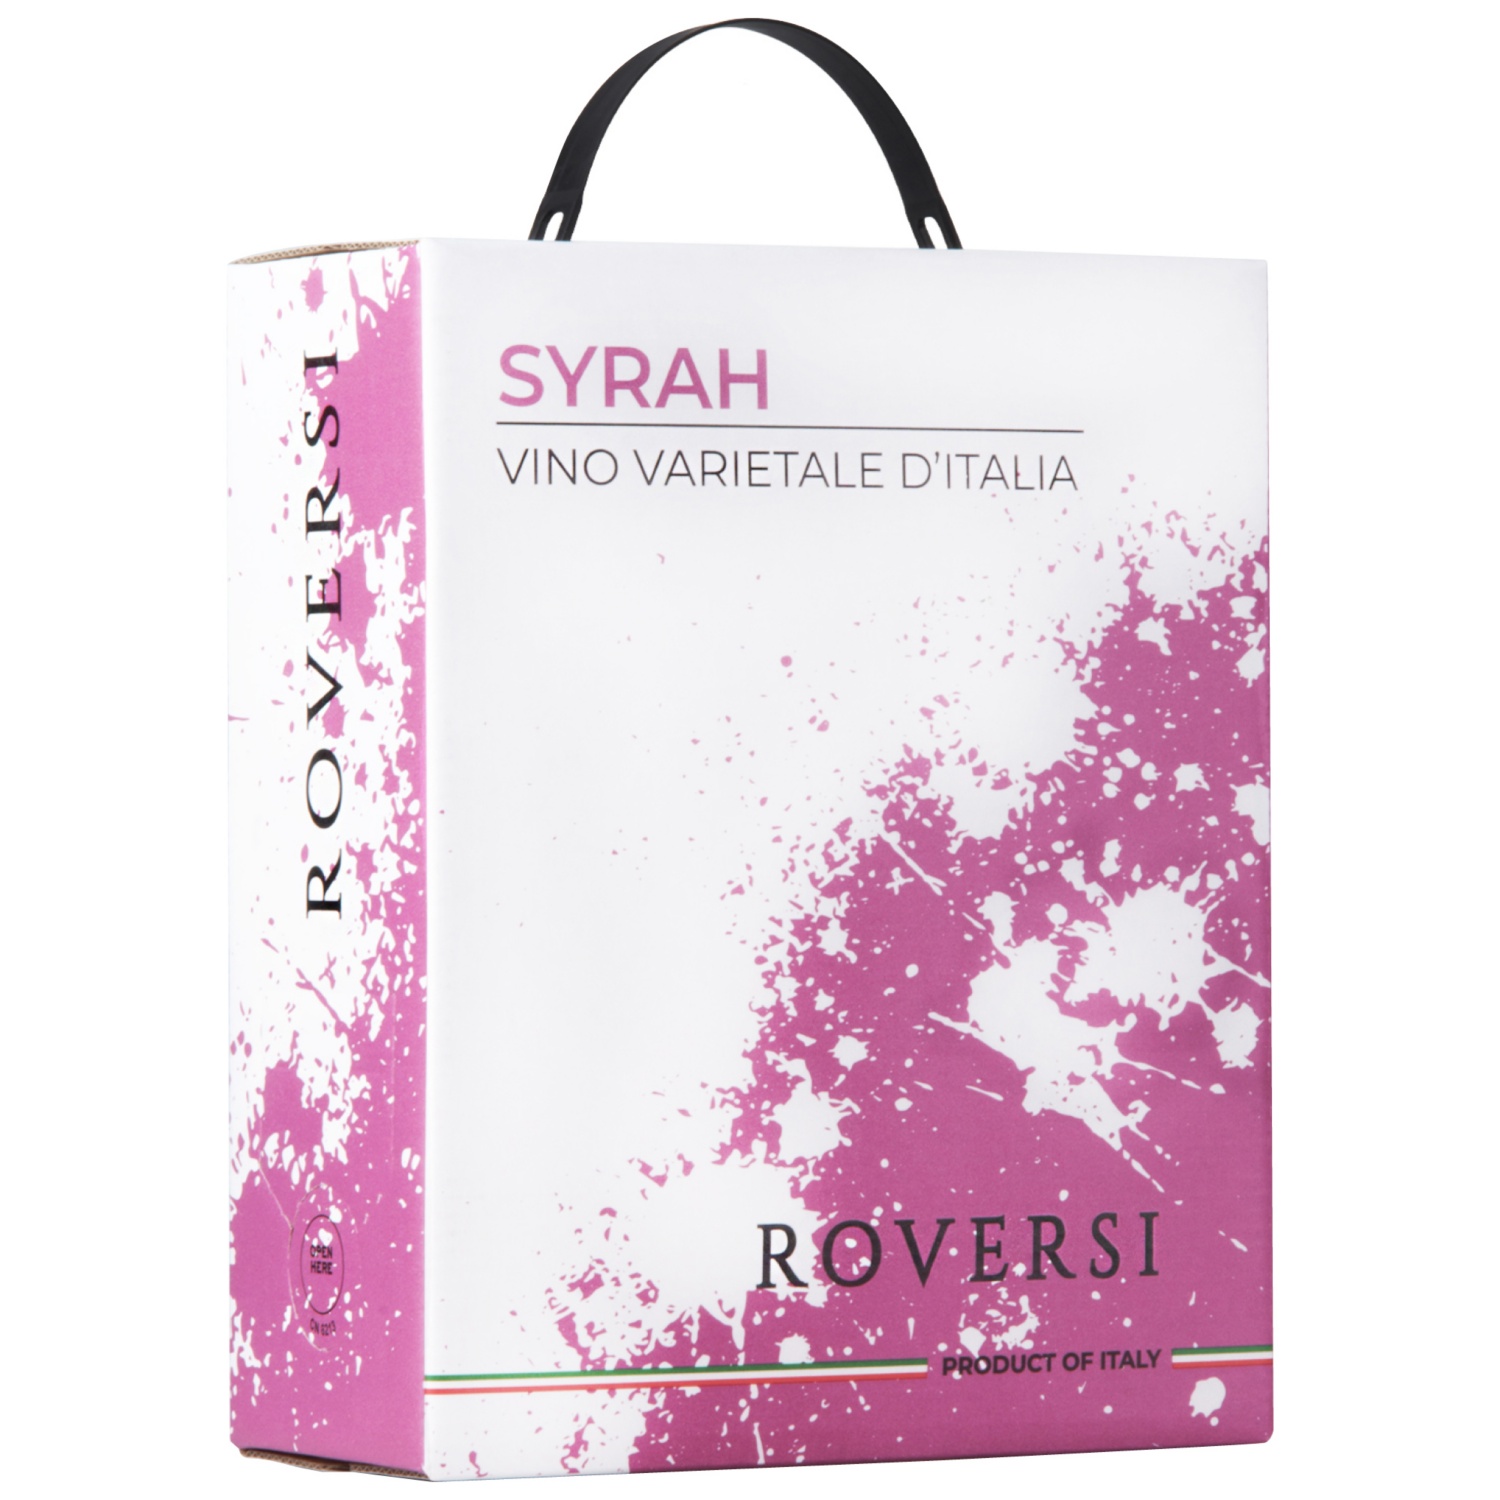 ROVERSI Bag-in-Box Syrah